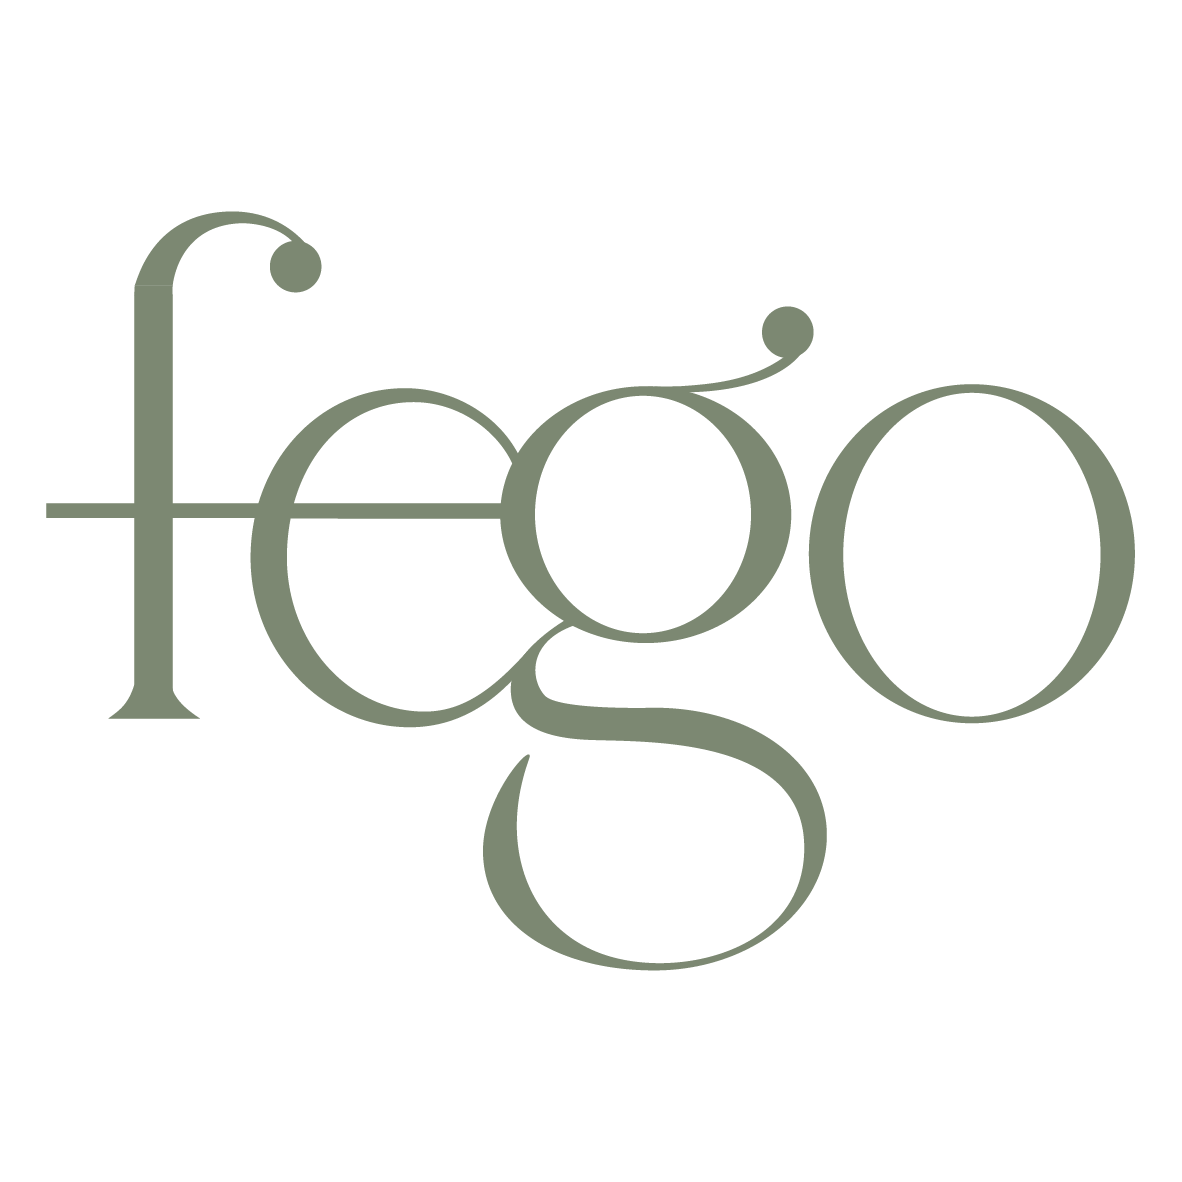 Fego | Home Living, Lifestyle And Gifting